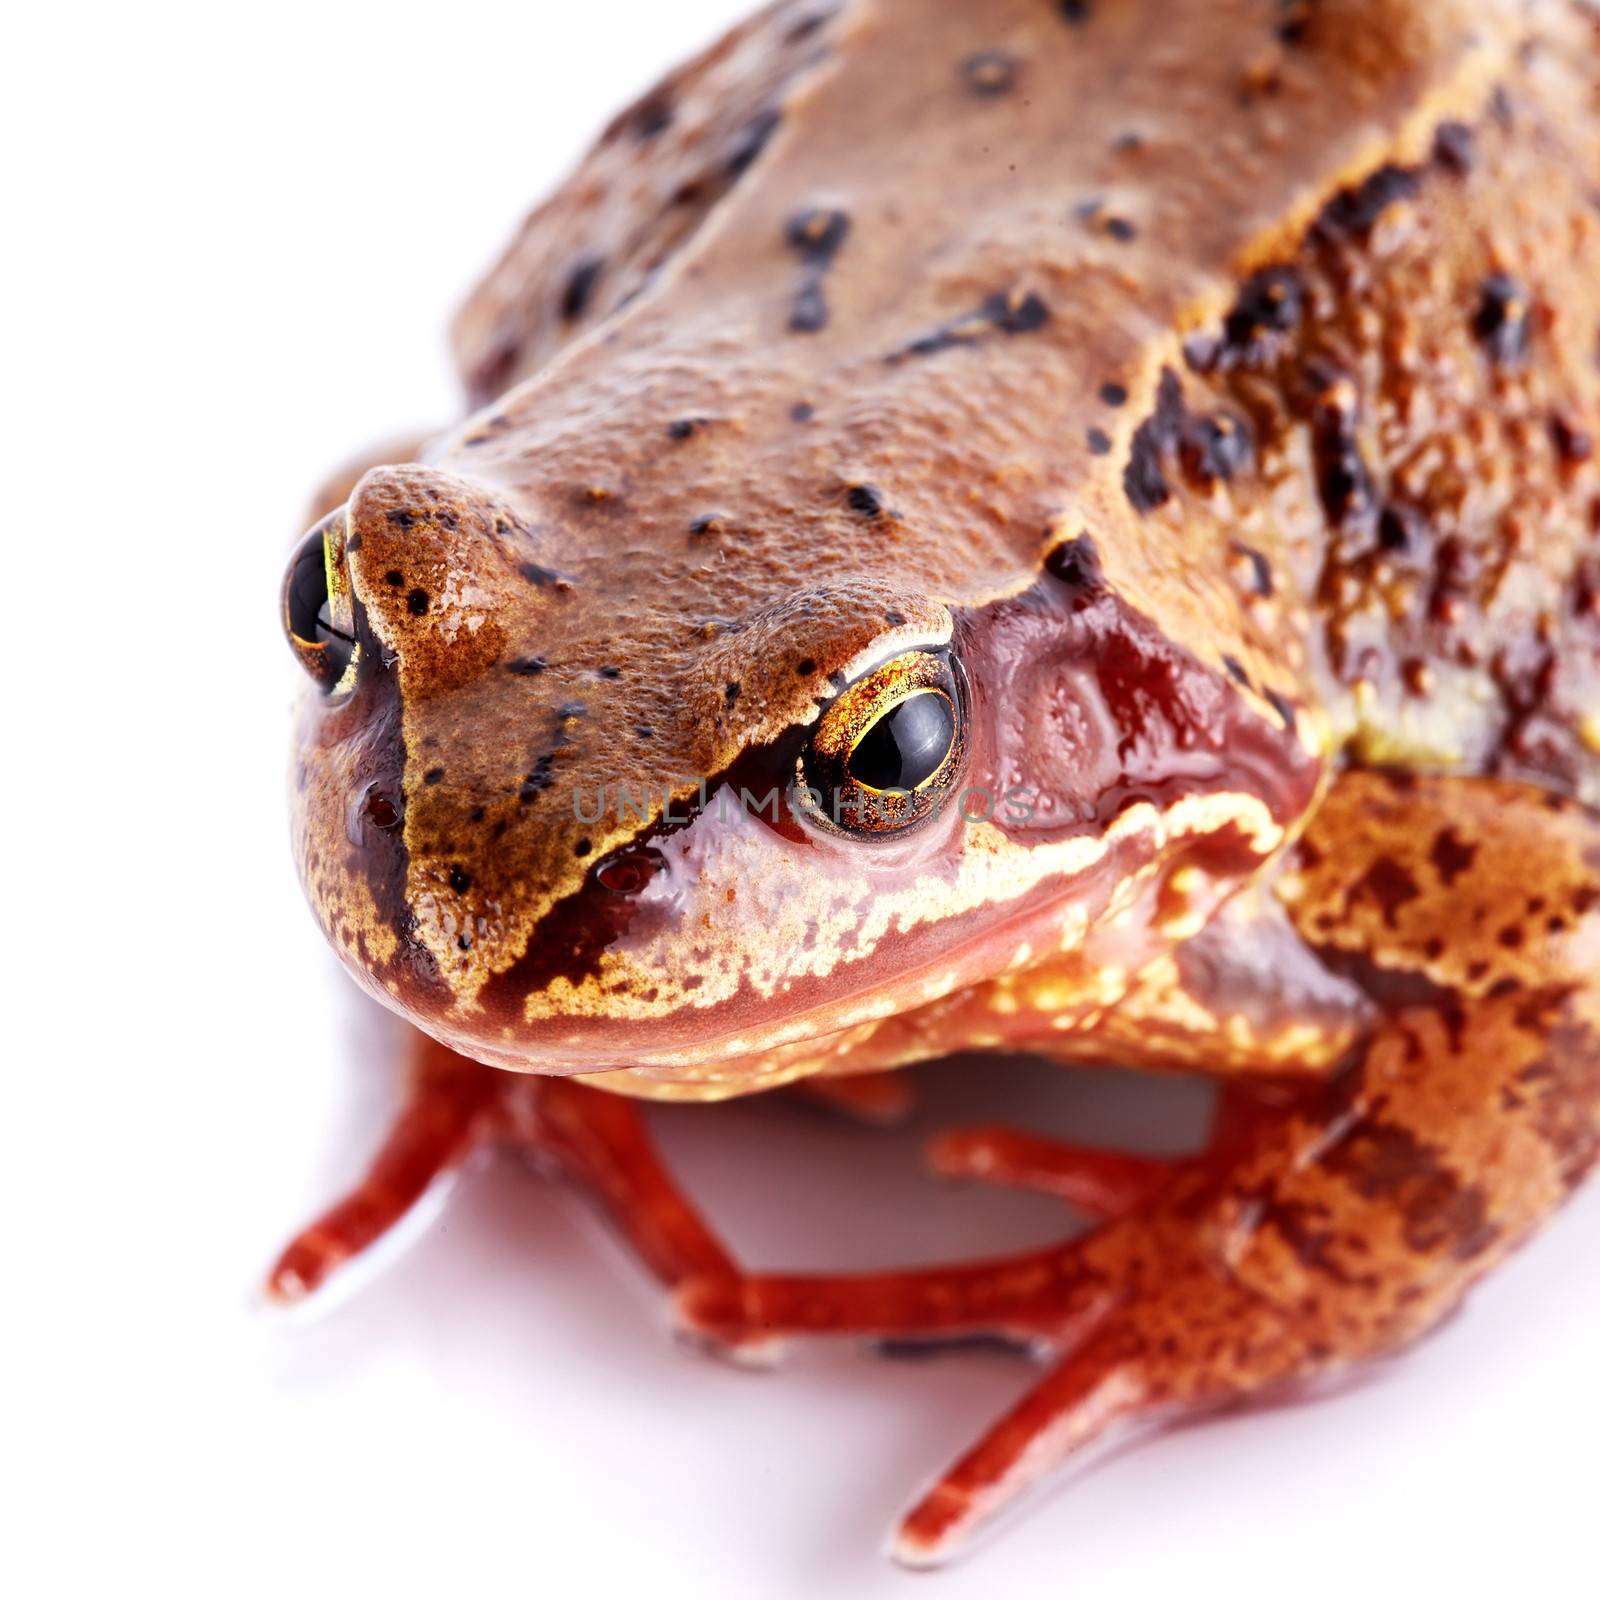 Common frog. Wet frog. Amphibian. Brown frog. Portrait of a frog.